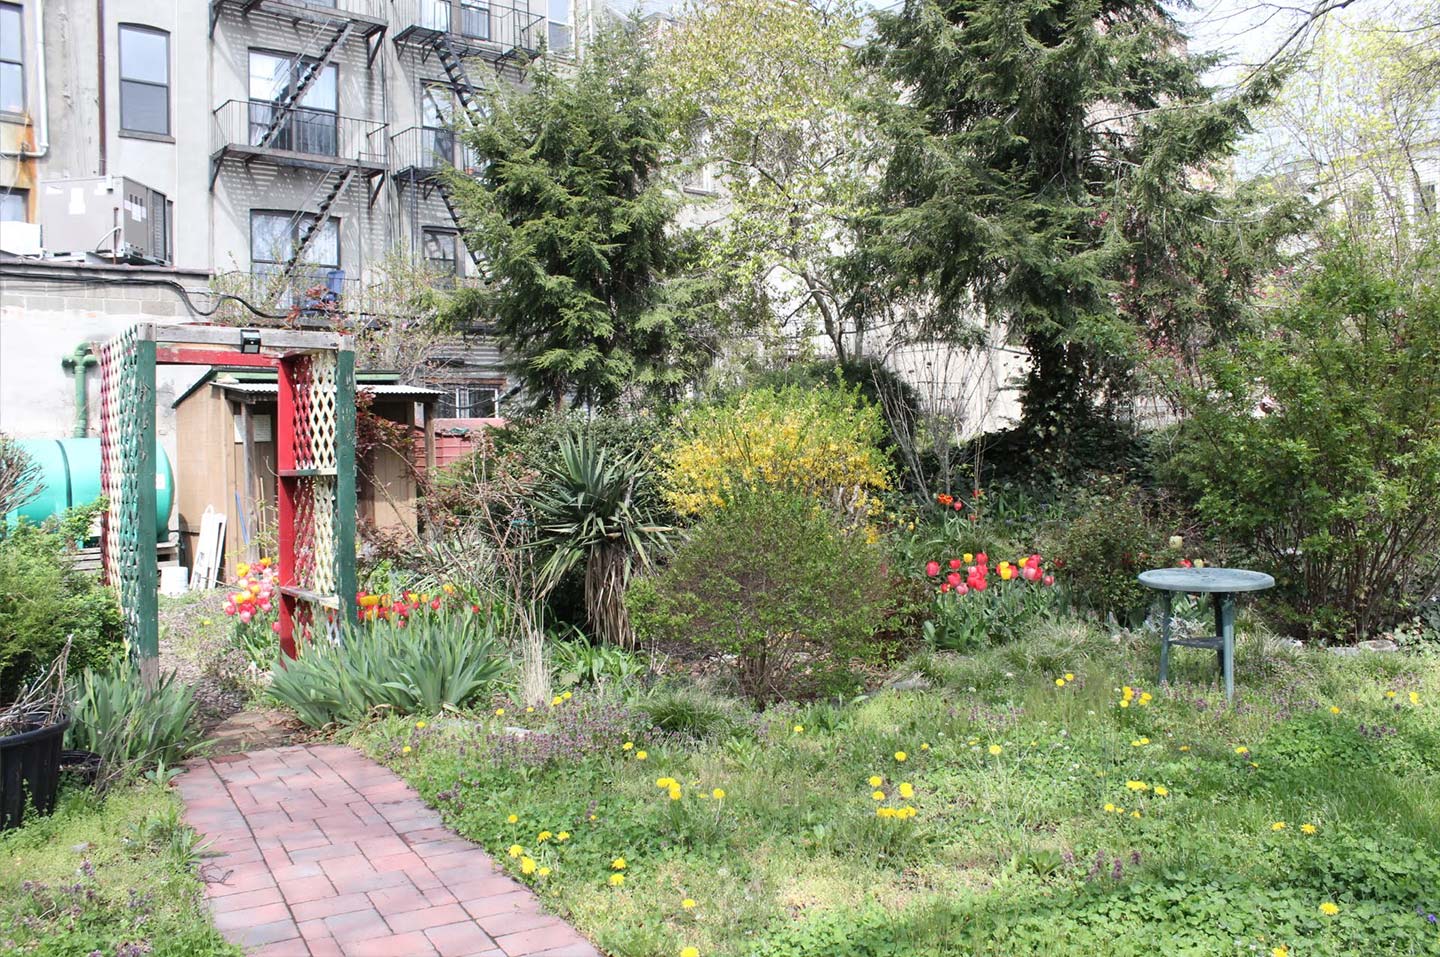 Image of community garden in Brooklyn